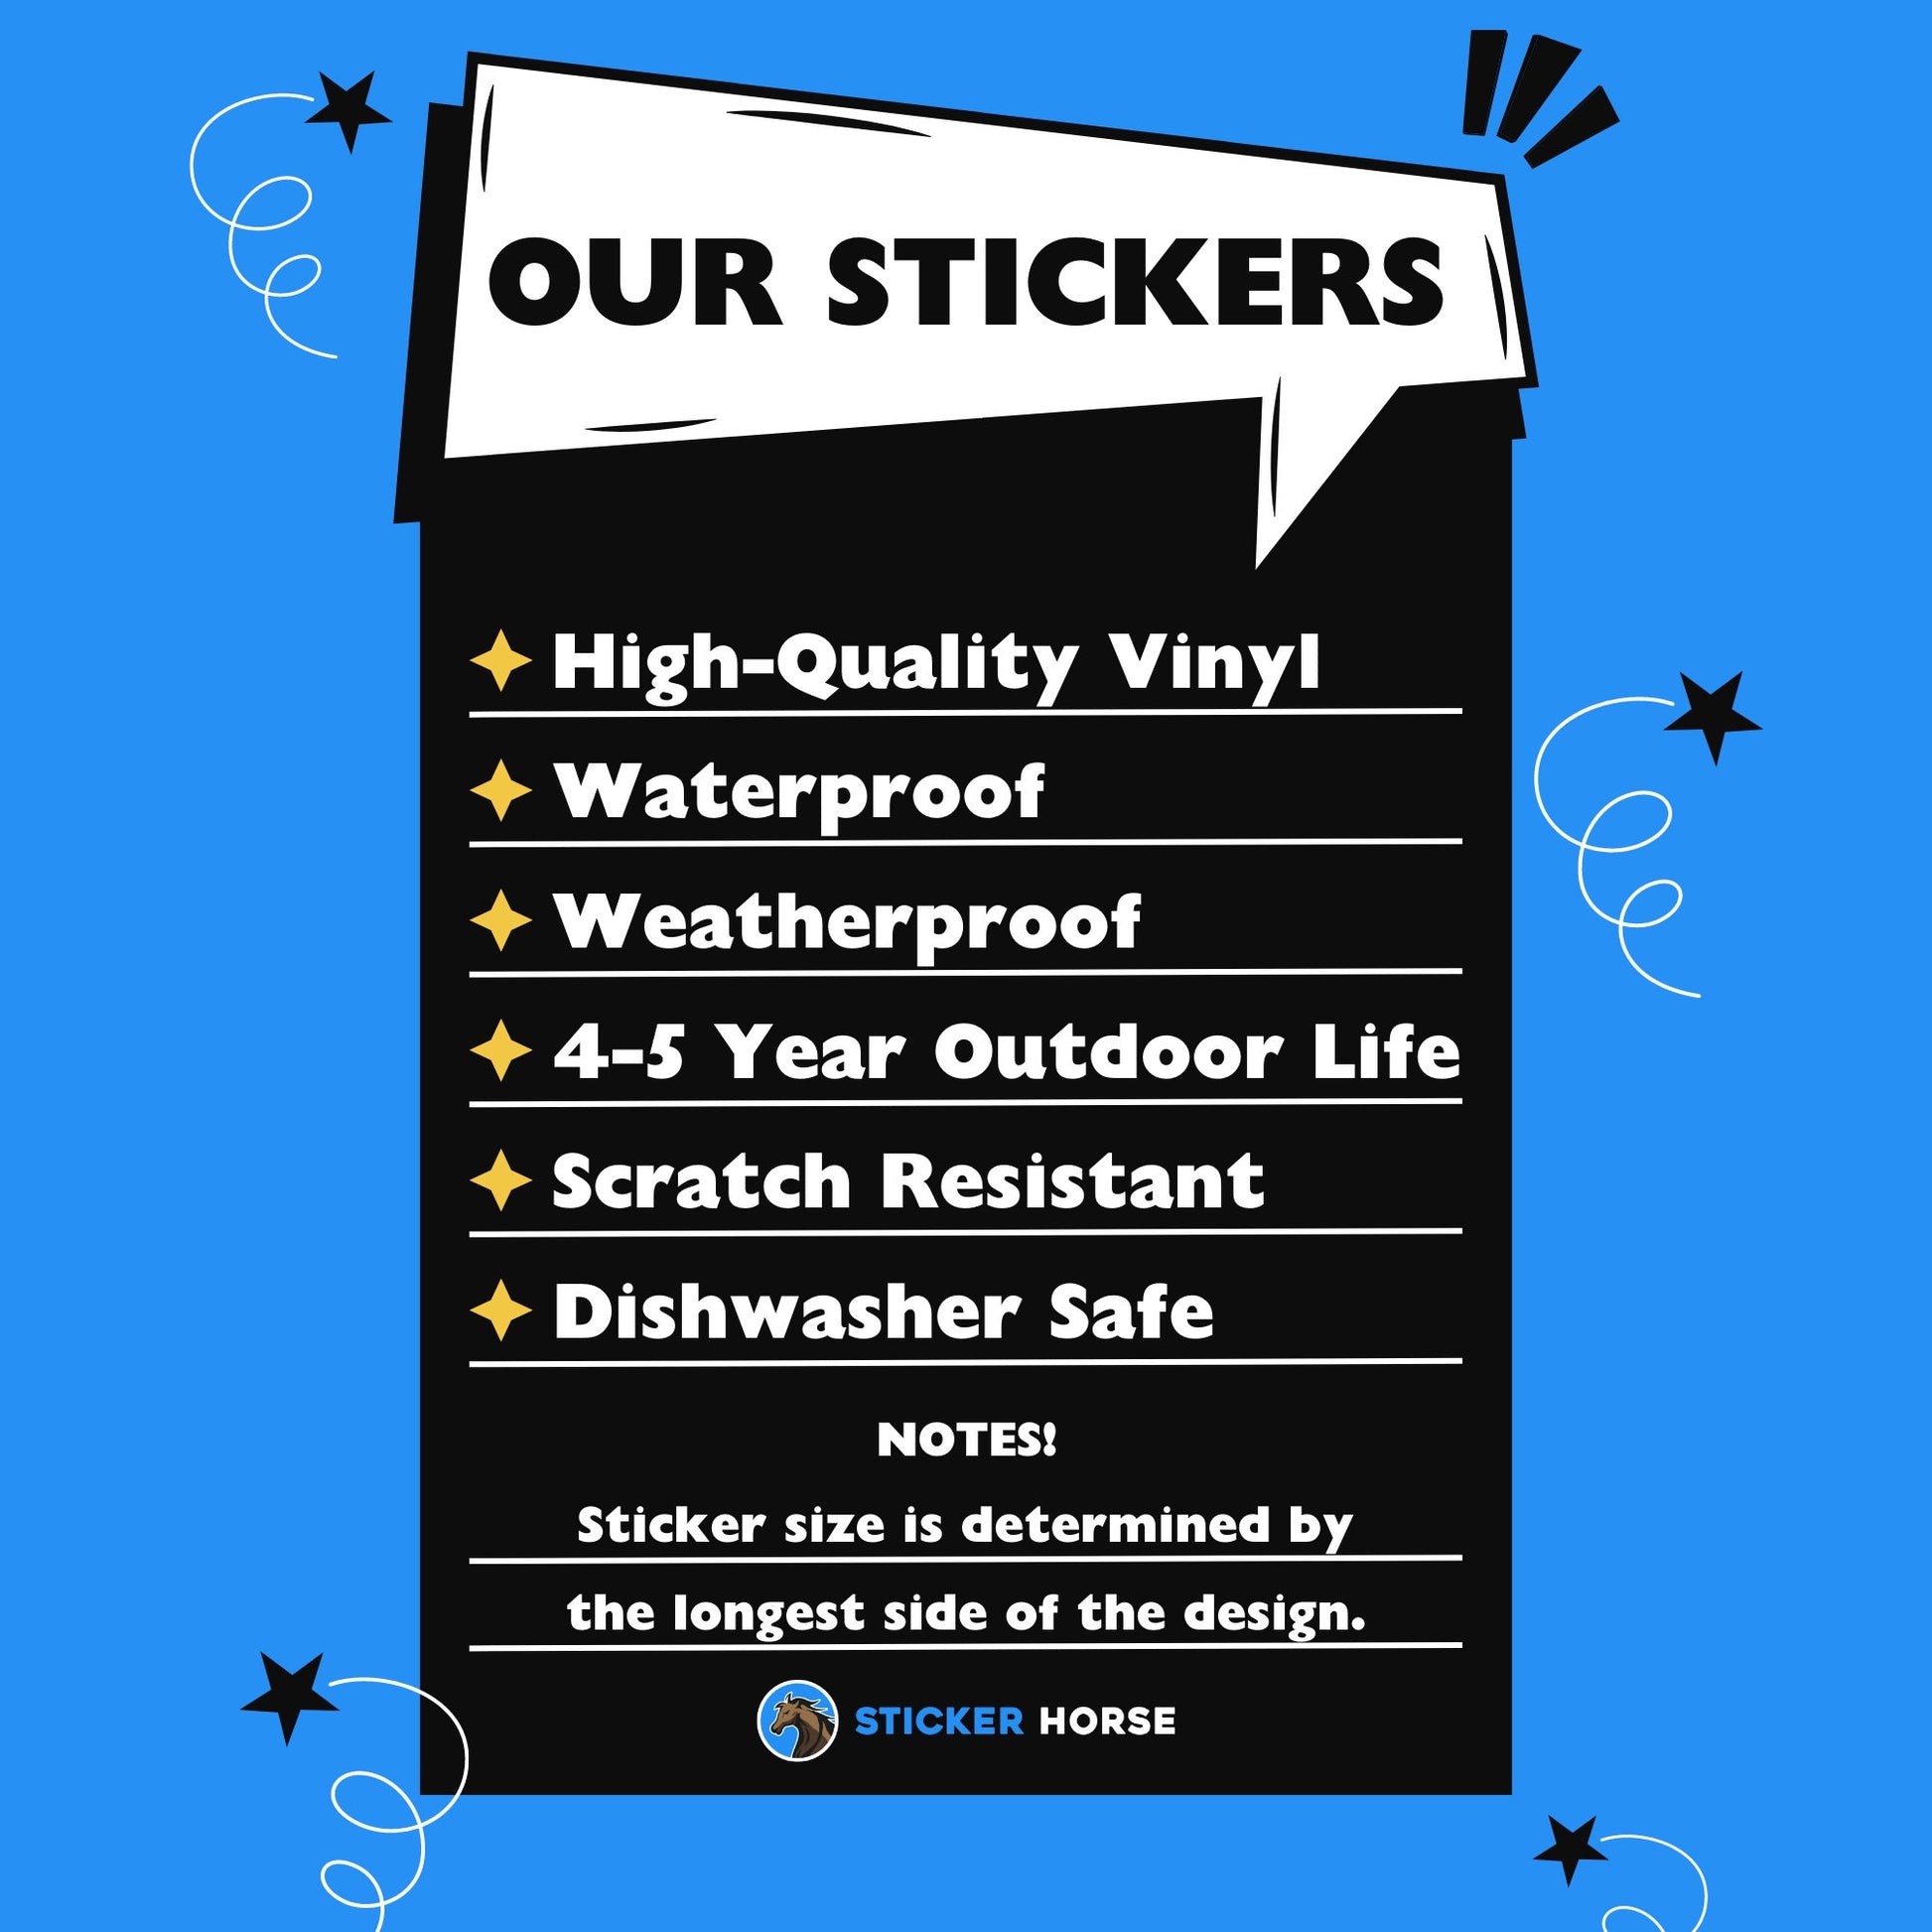 Missing My Mental Stability Sticker, Mental Health Awareness Sticker, Sarcastic Funny Sticker, Dark Humor, Cute Gift, Milk Carton Sticker